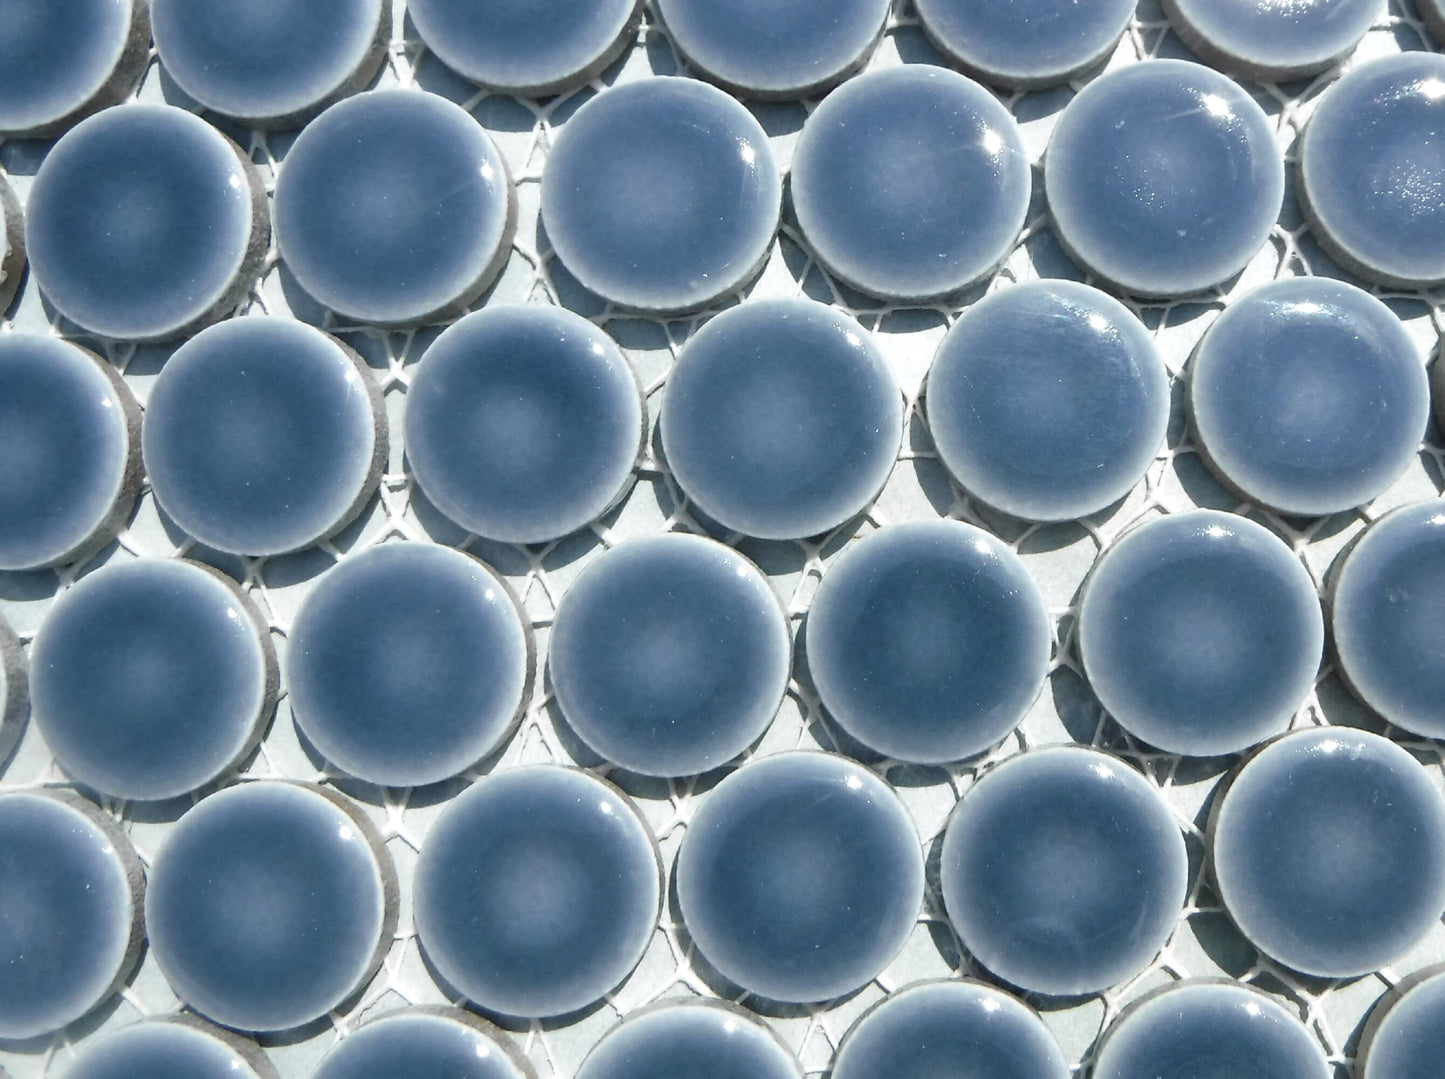 Shark Gray Ceramic Tiles - 2 cm Penny Rounds Mosaic Tiles - .8 inch - 25 Tiles - Circles